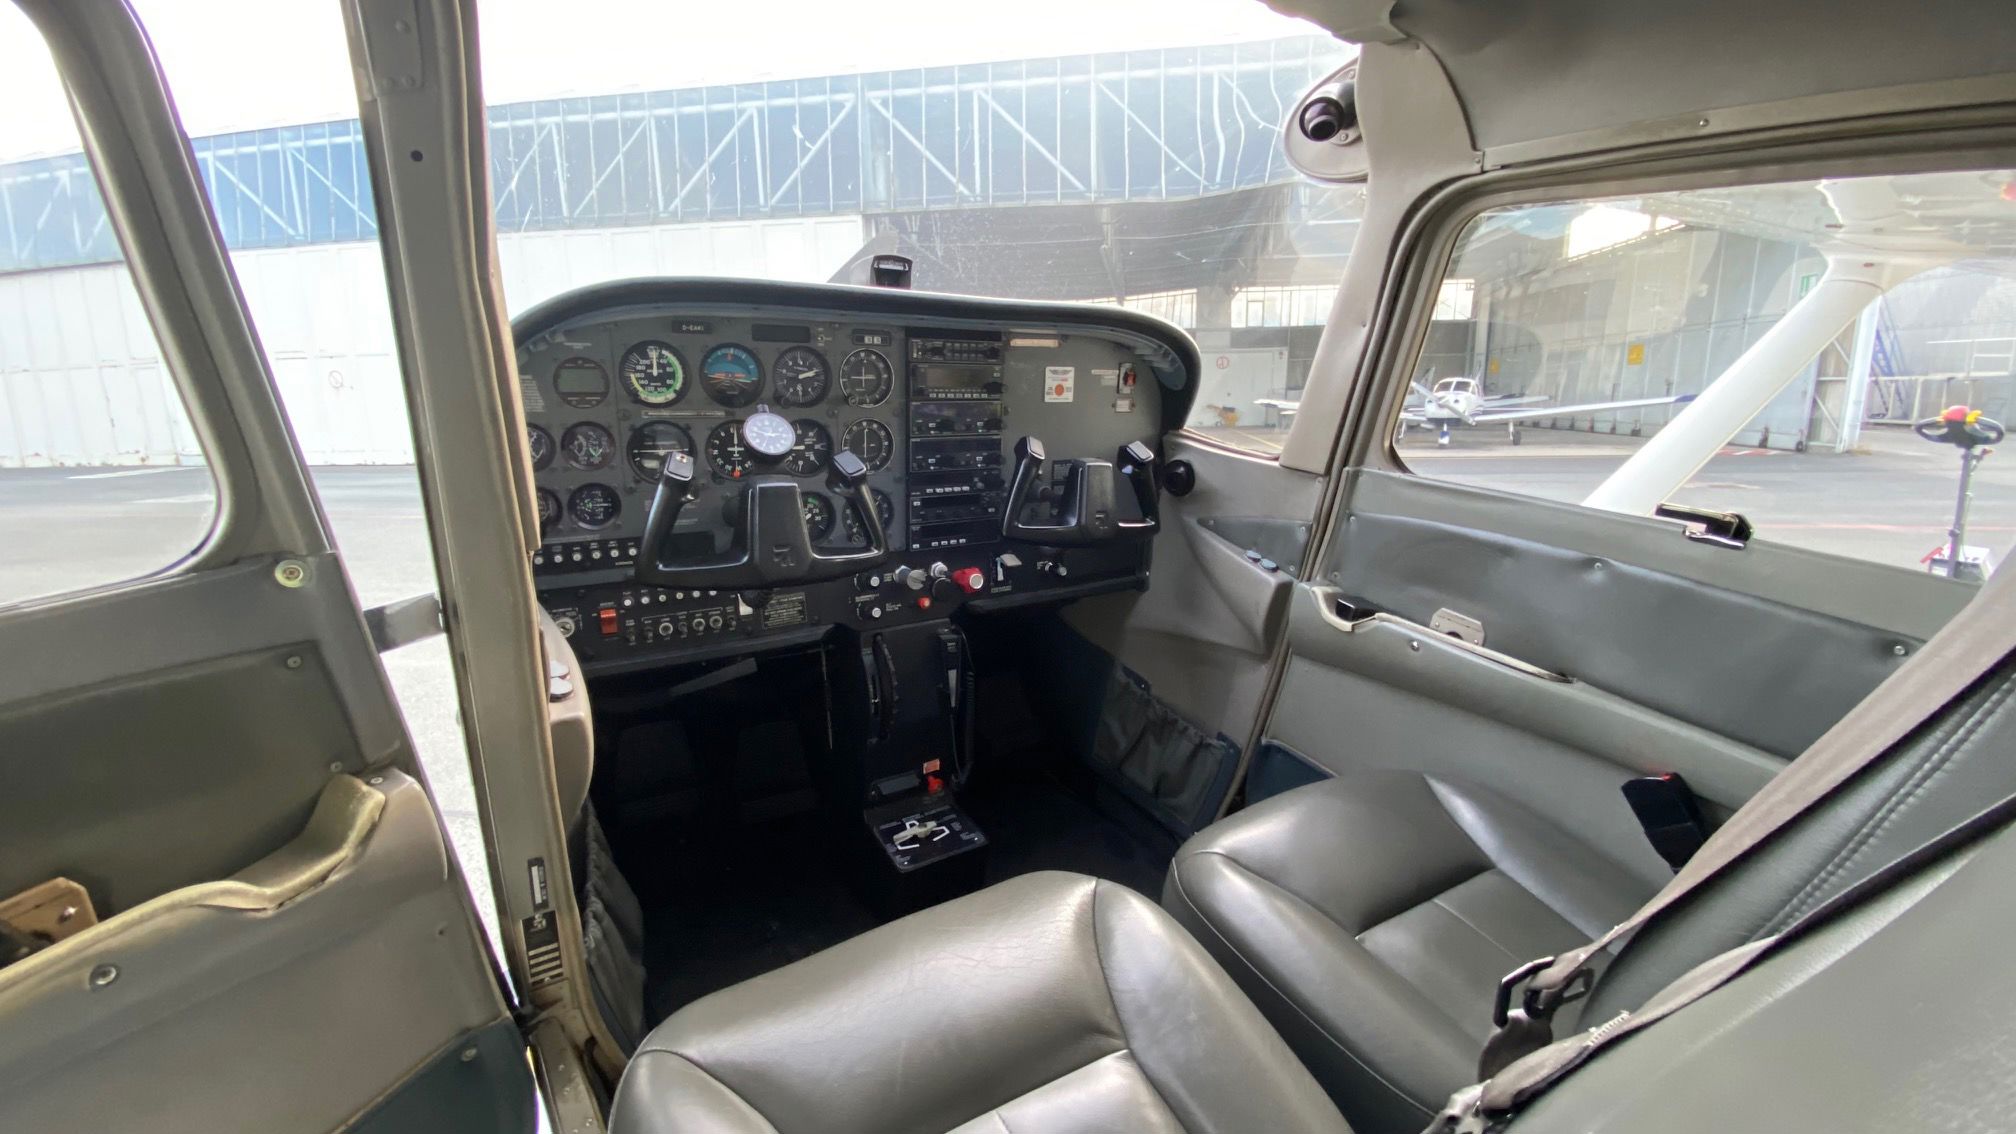 1997 Cessna 172R - Interior